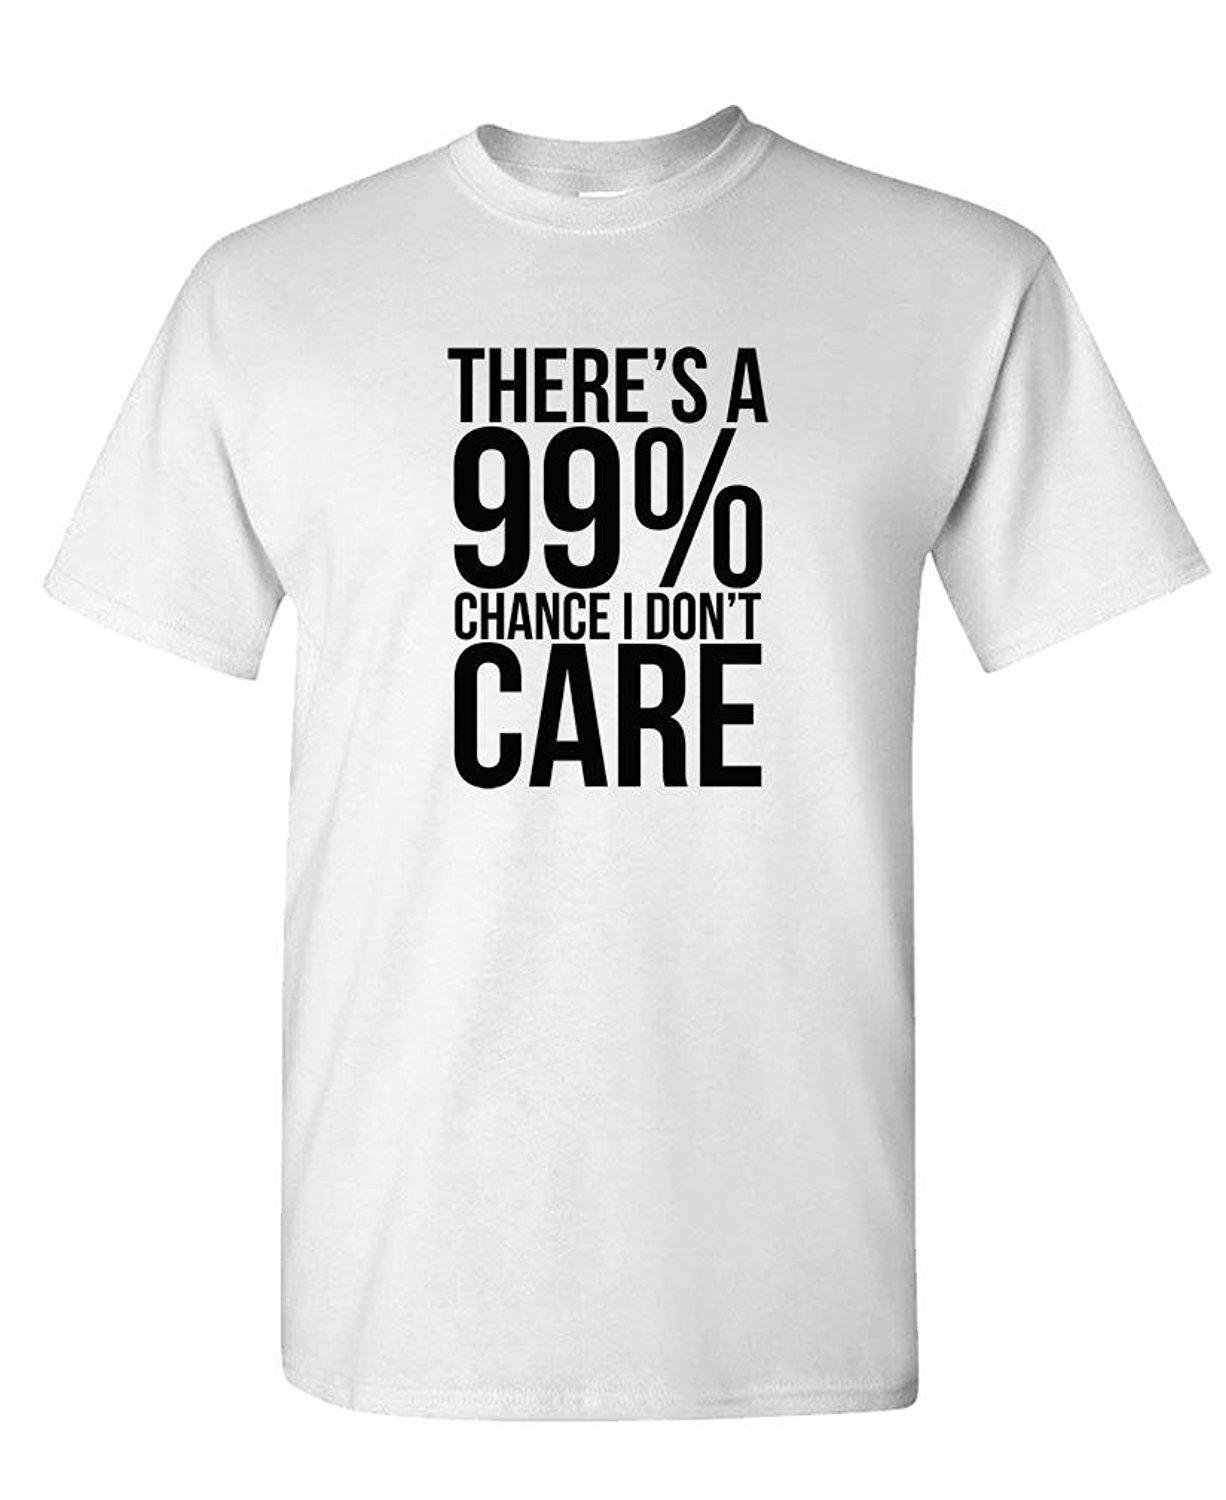 T Shirt Clothing For Men For Sale Mens Shirt Clothing Online